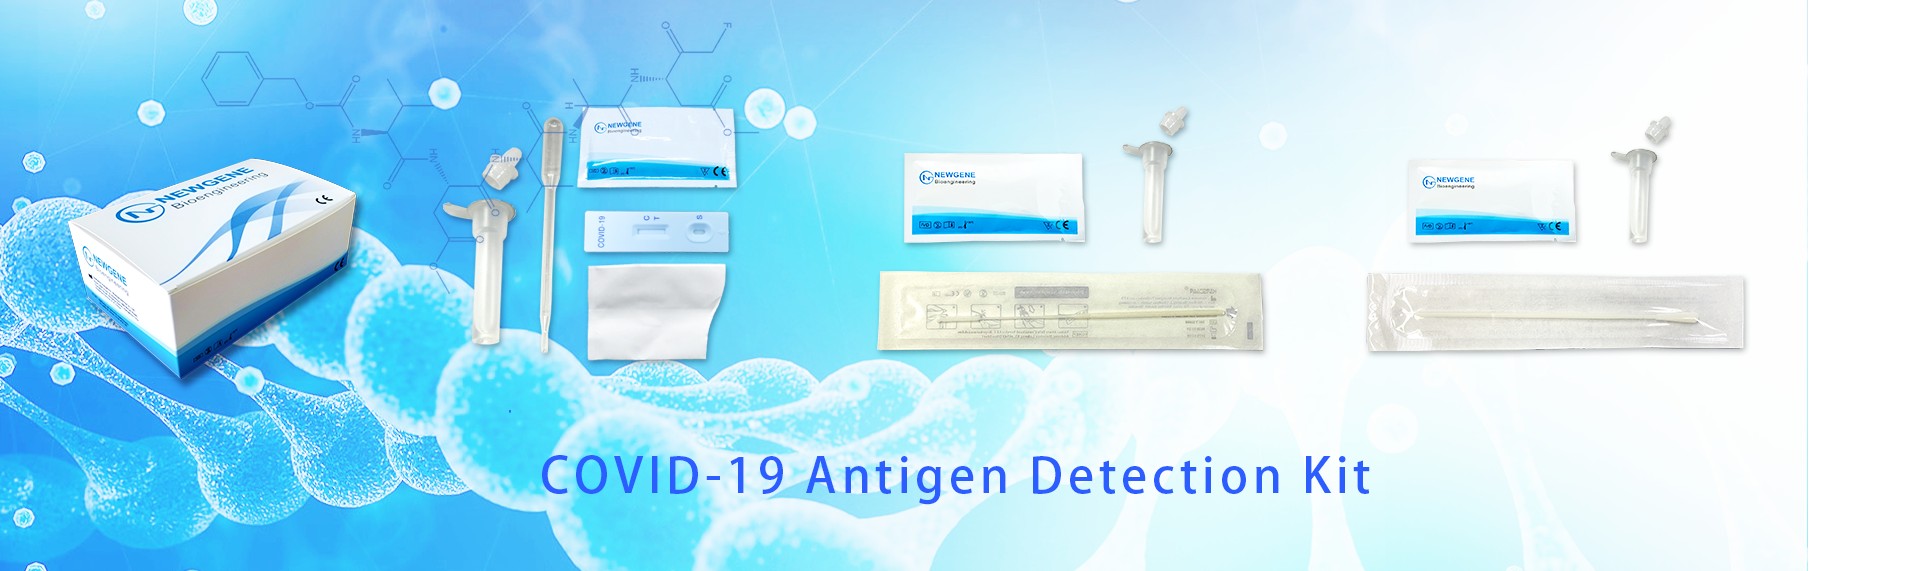 Kit detection antigen bioengineering newgene covid-19 Newgene COVID